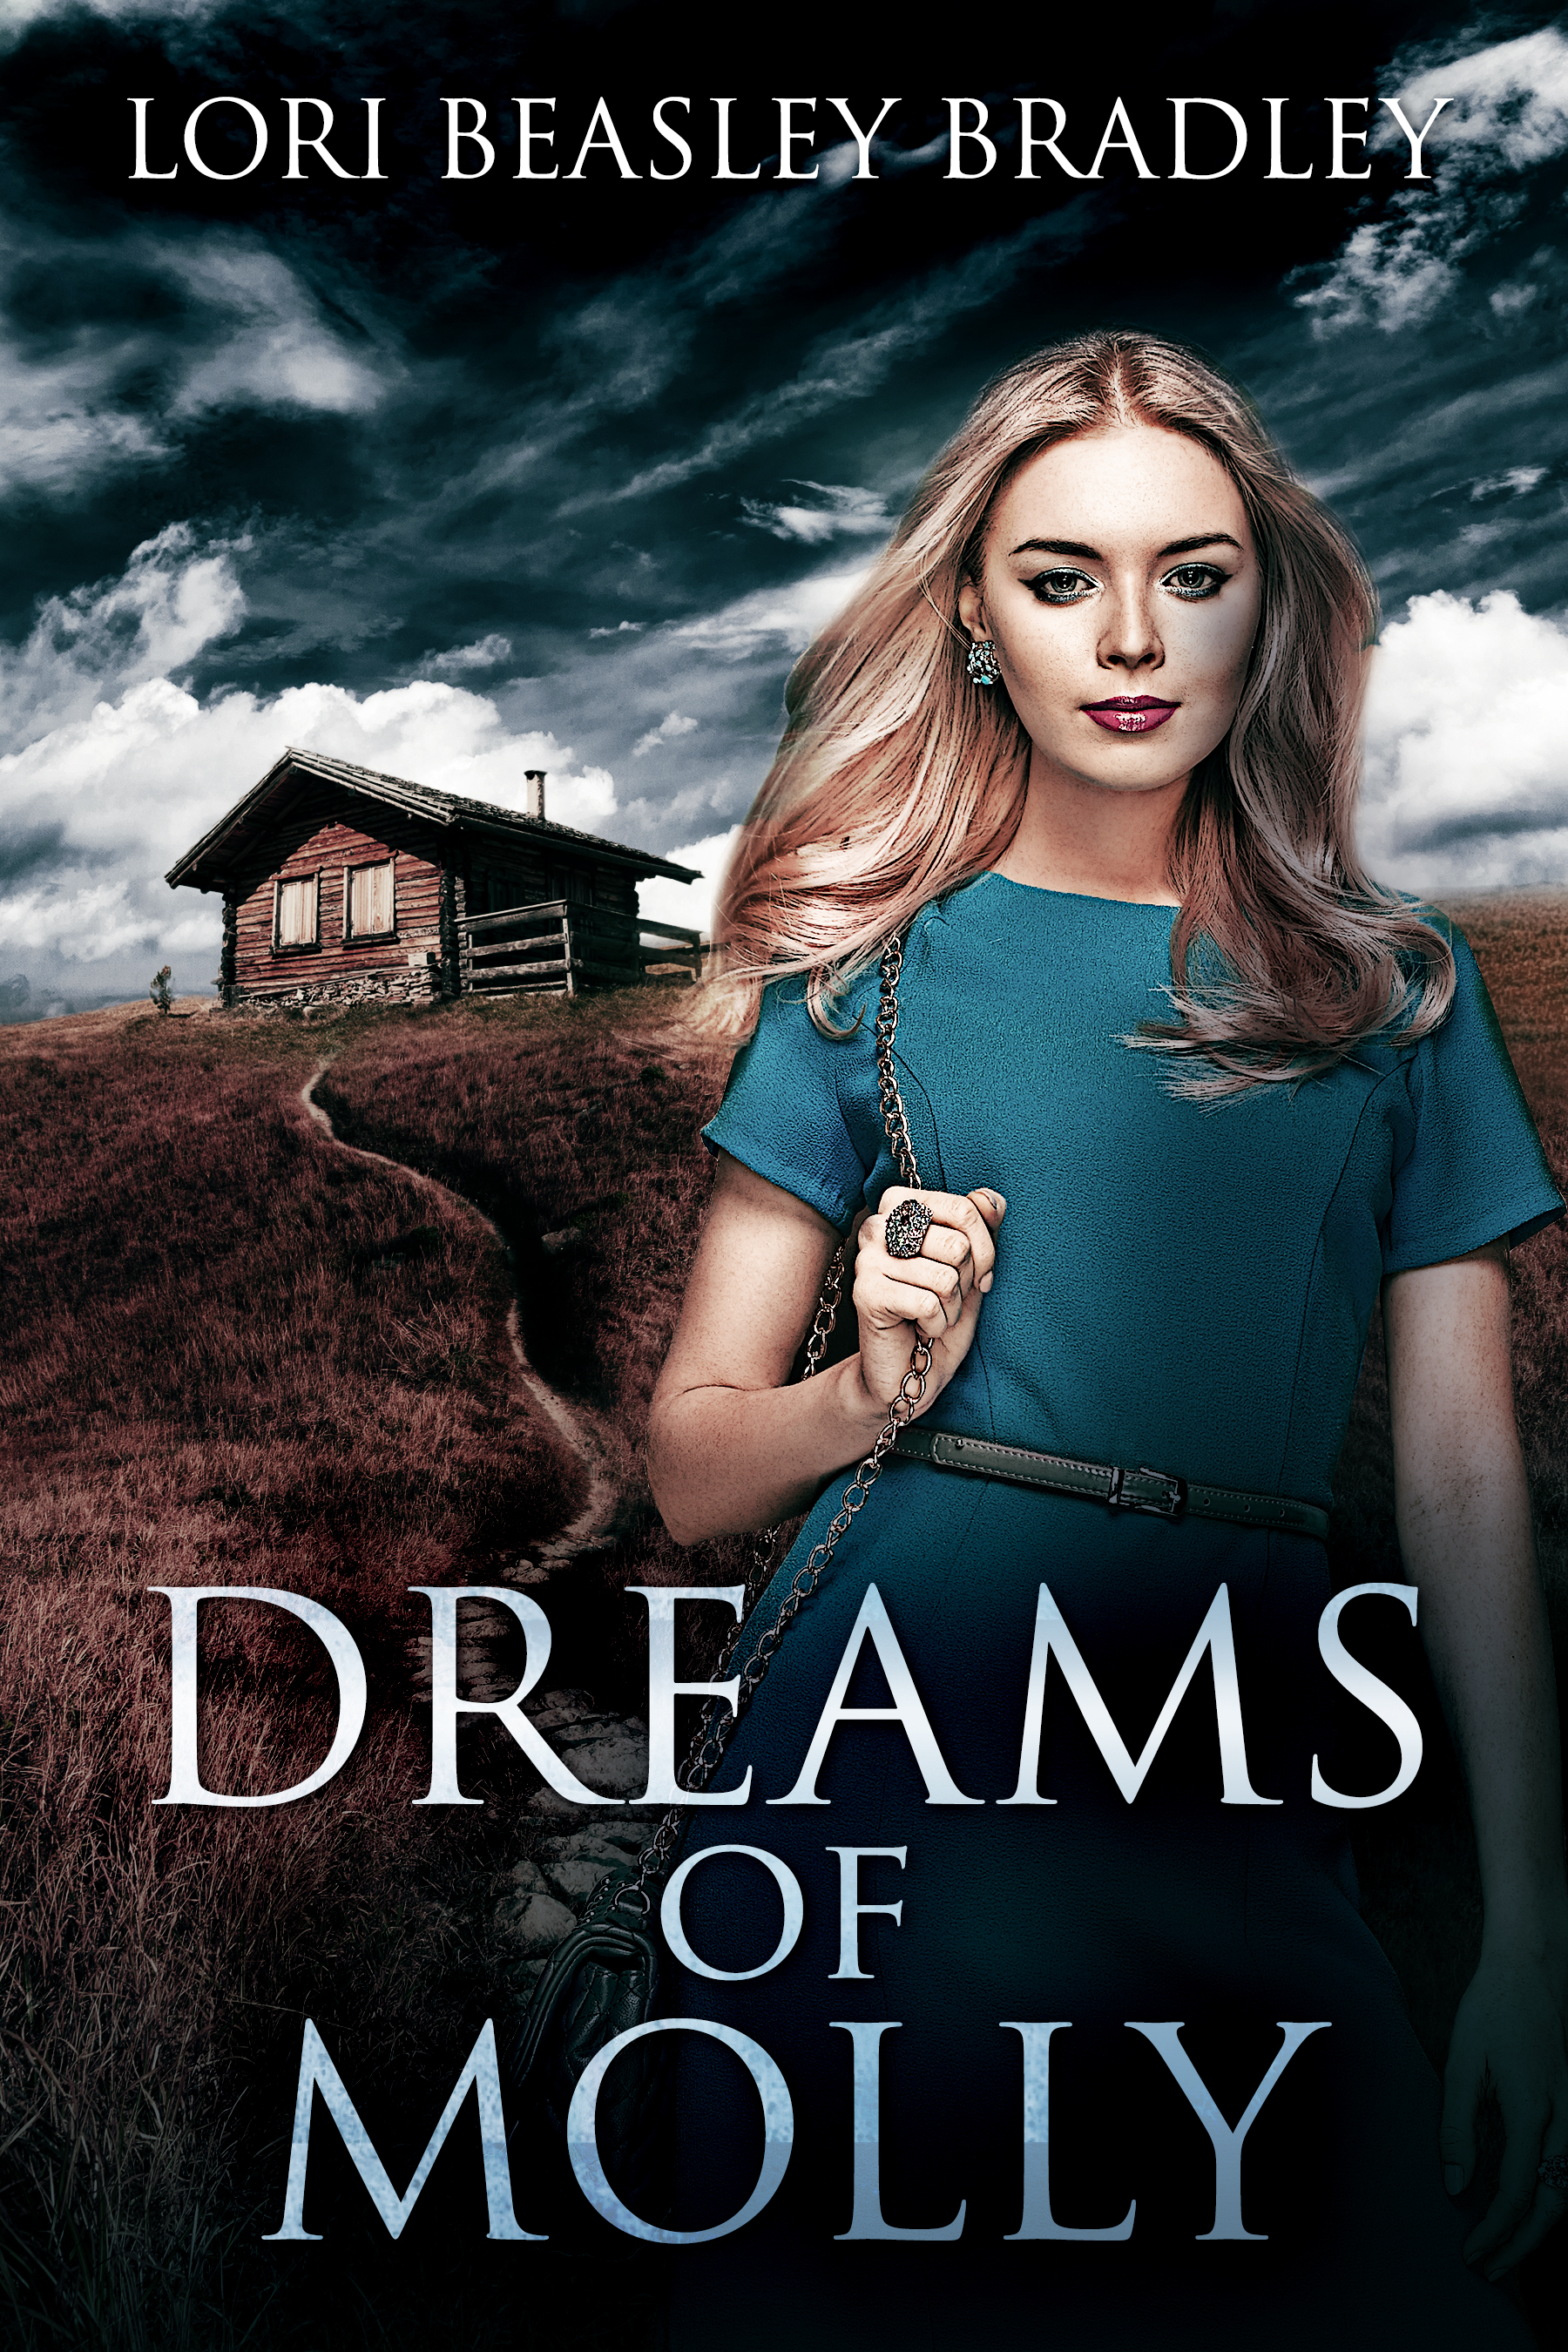 FREE: Dreams Of Molly by Lori Beasley Bradley